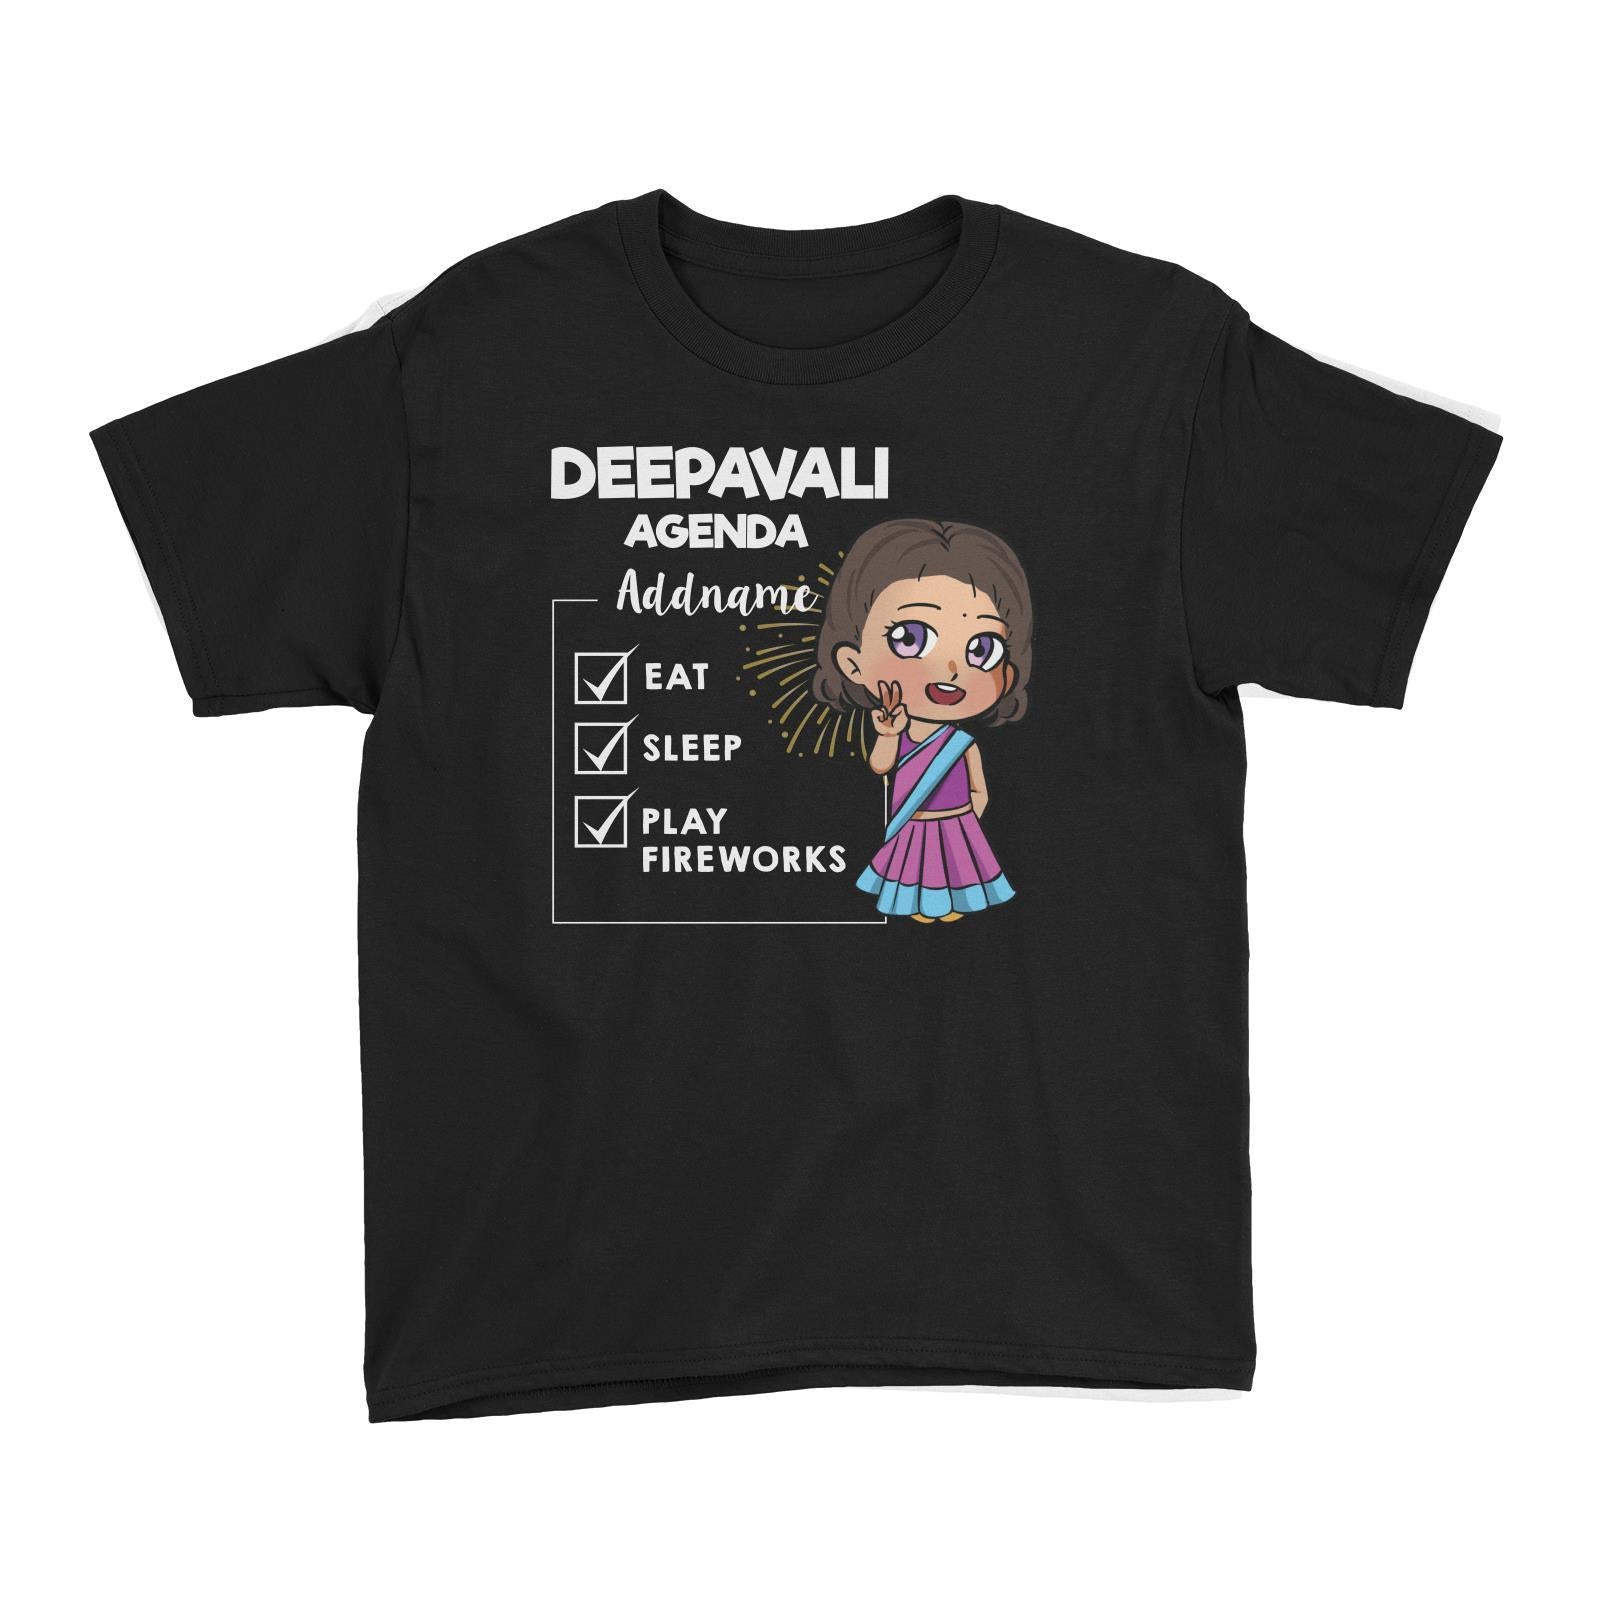 Deepavali Chibi Little Girl Agenda Addname Kid's T-Shirt